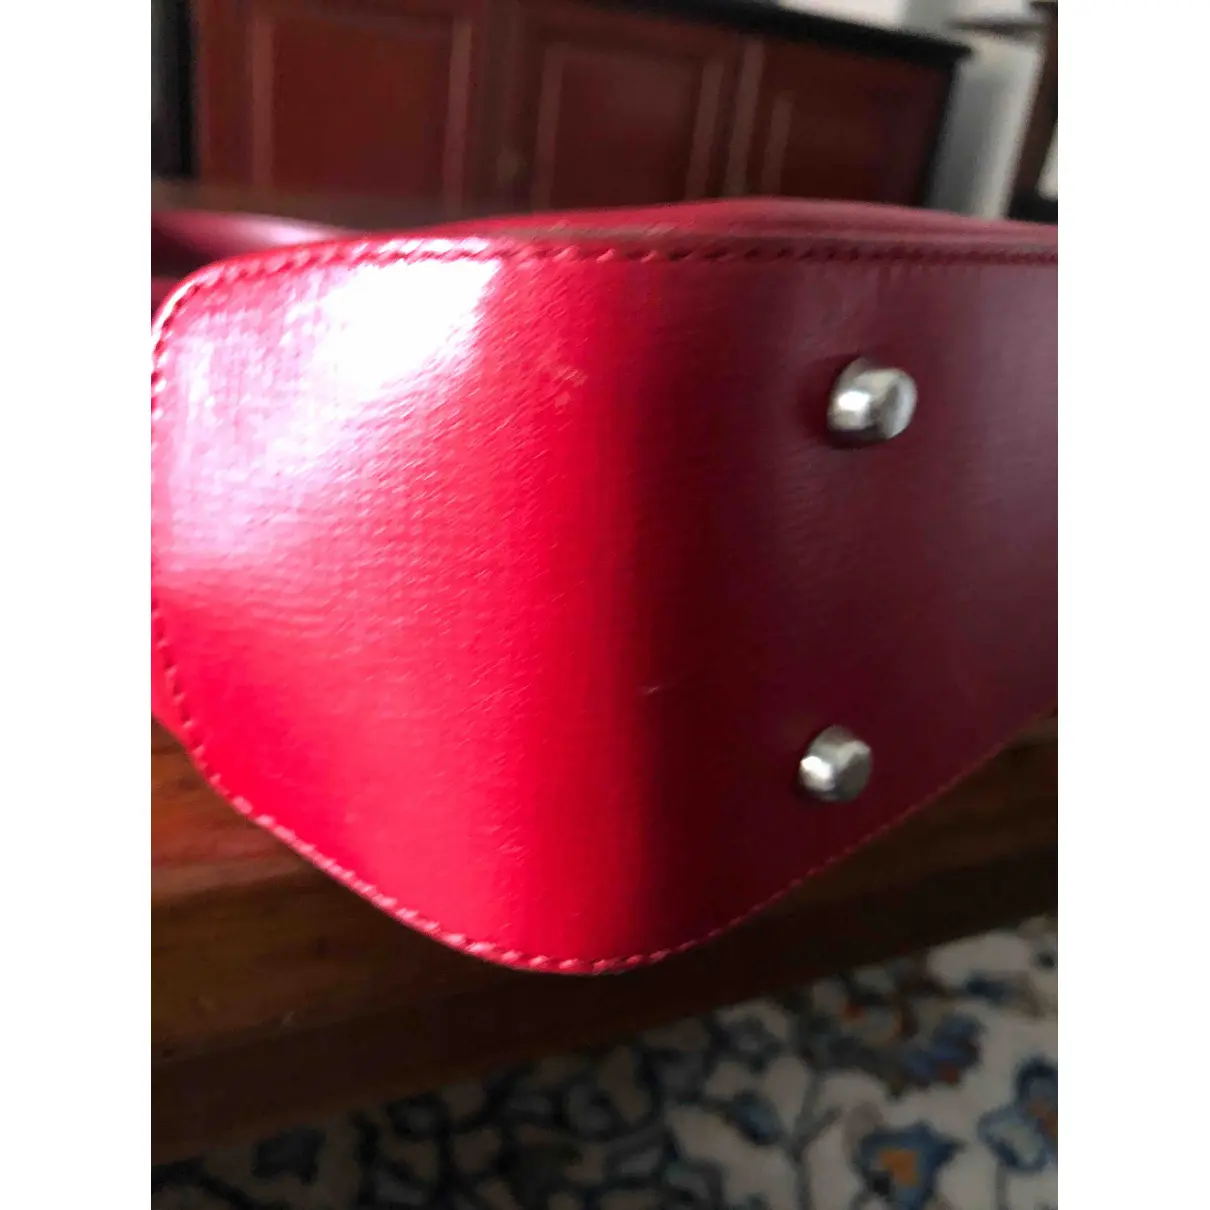 Leather handbag Valextra